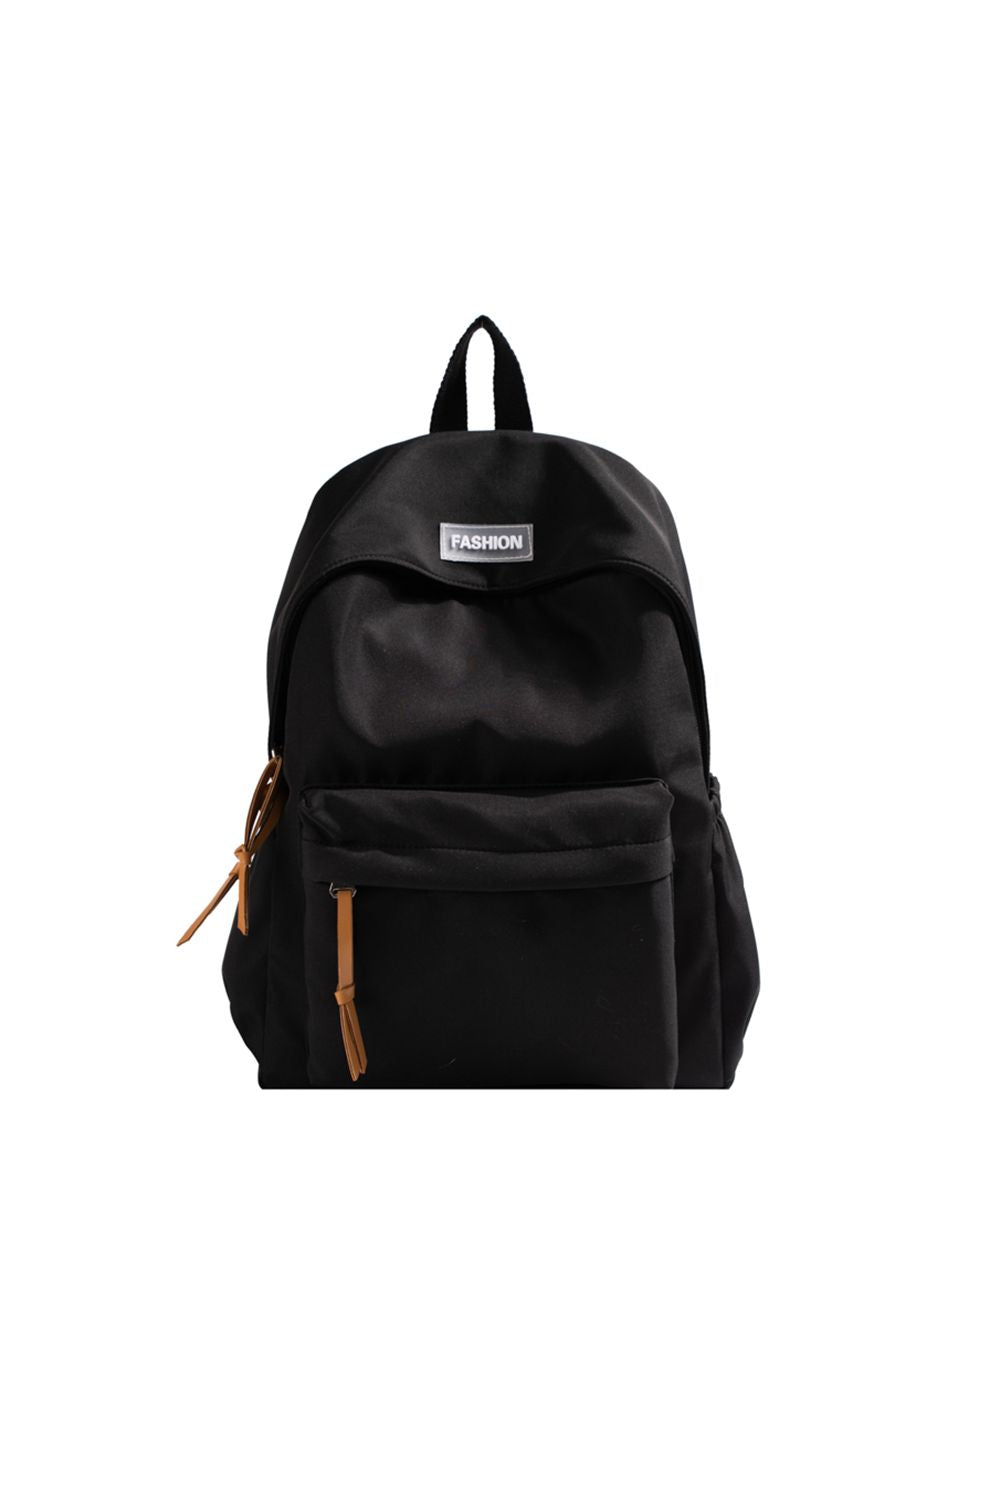 Black FASHION Polyester Backpack